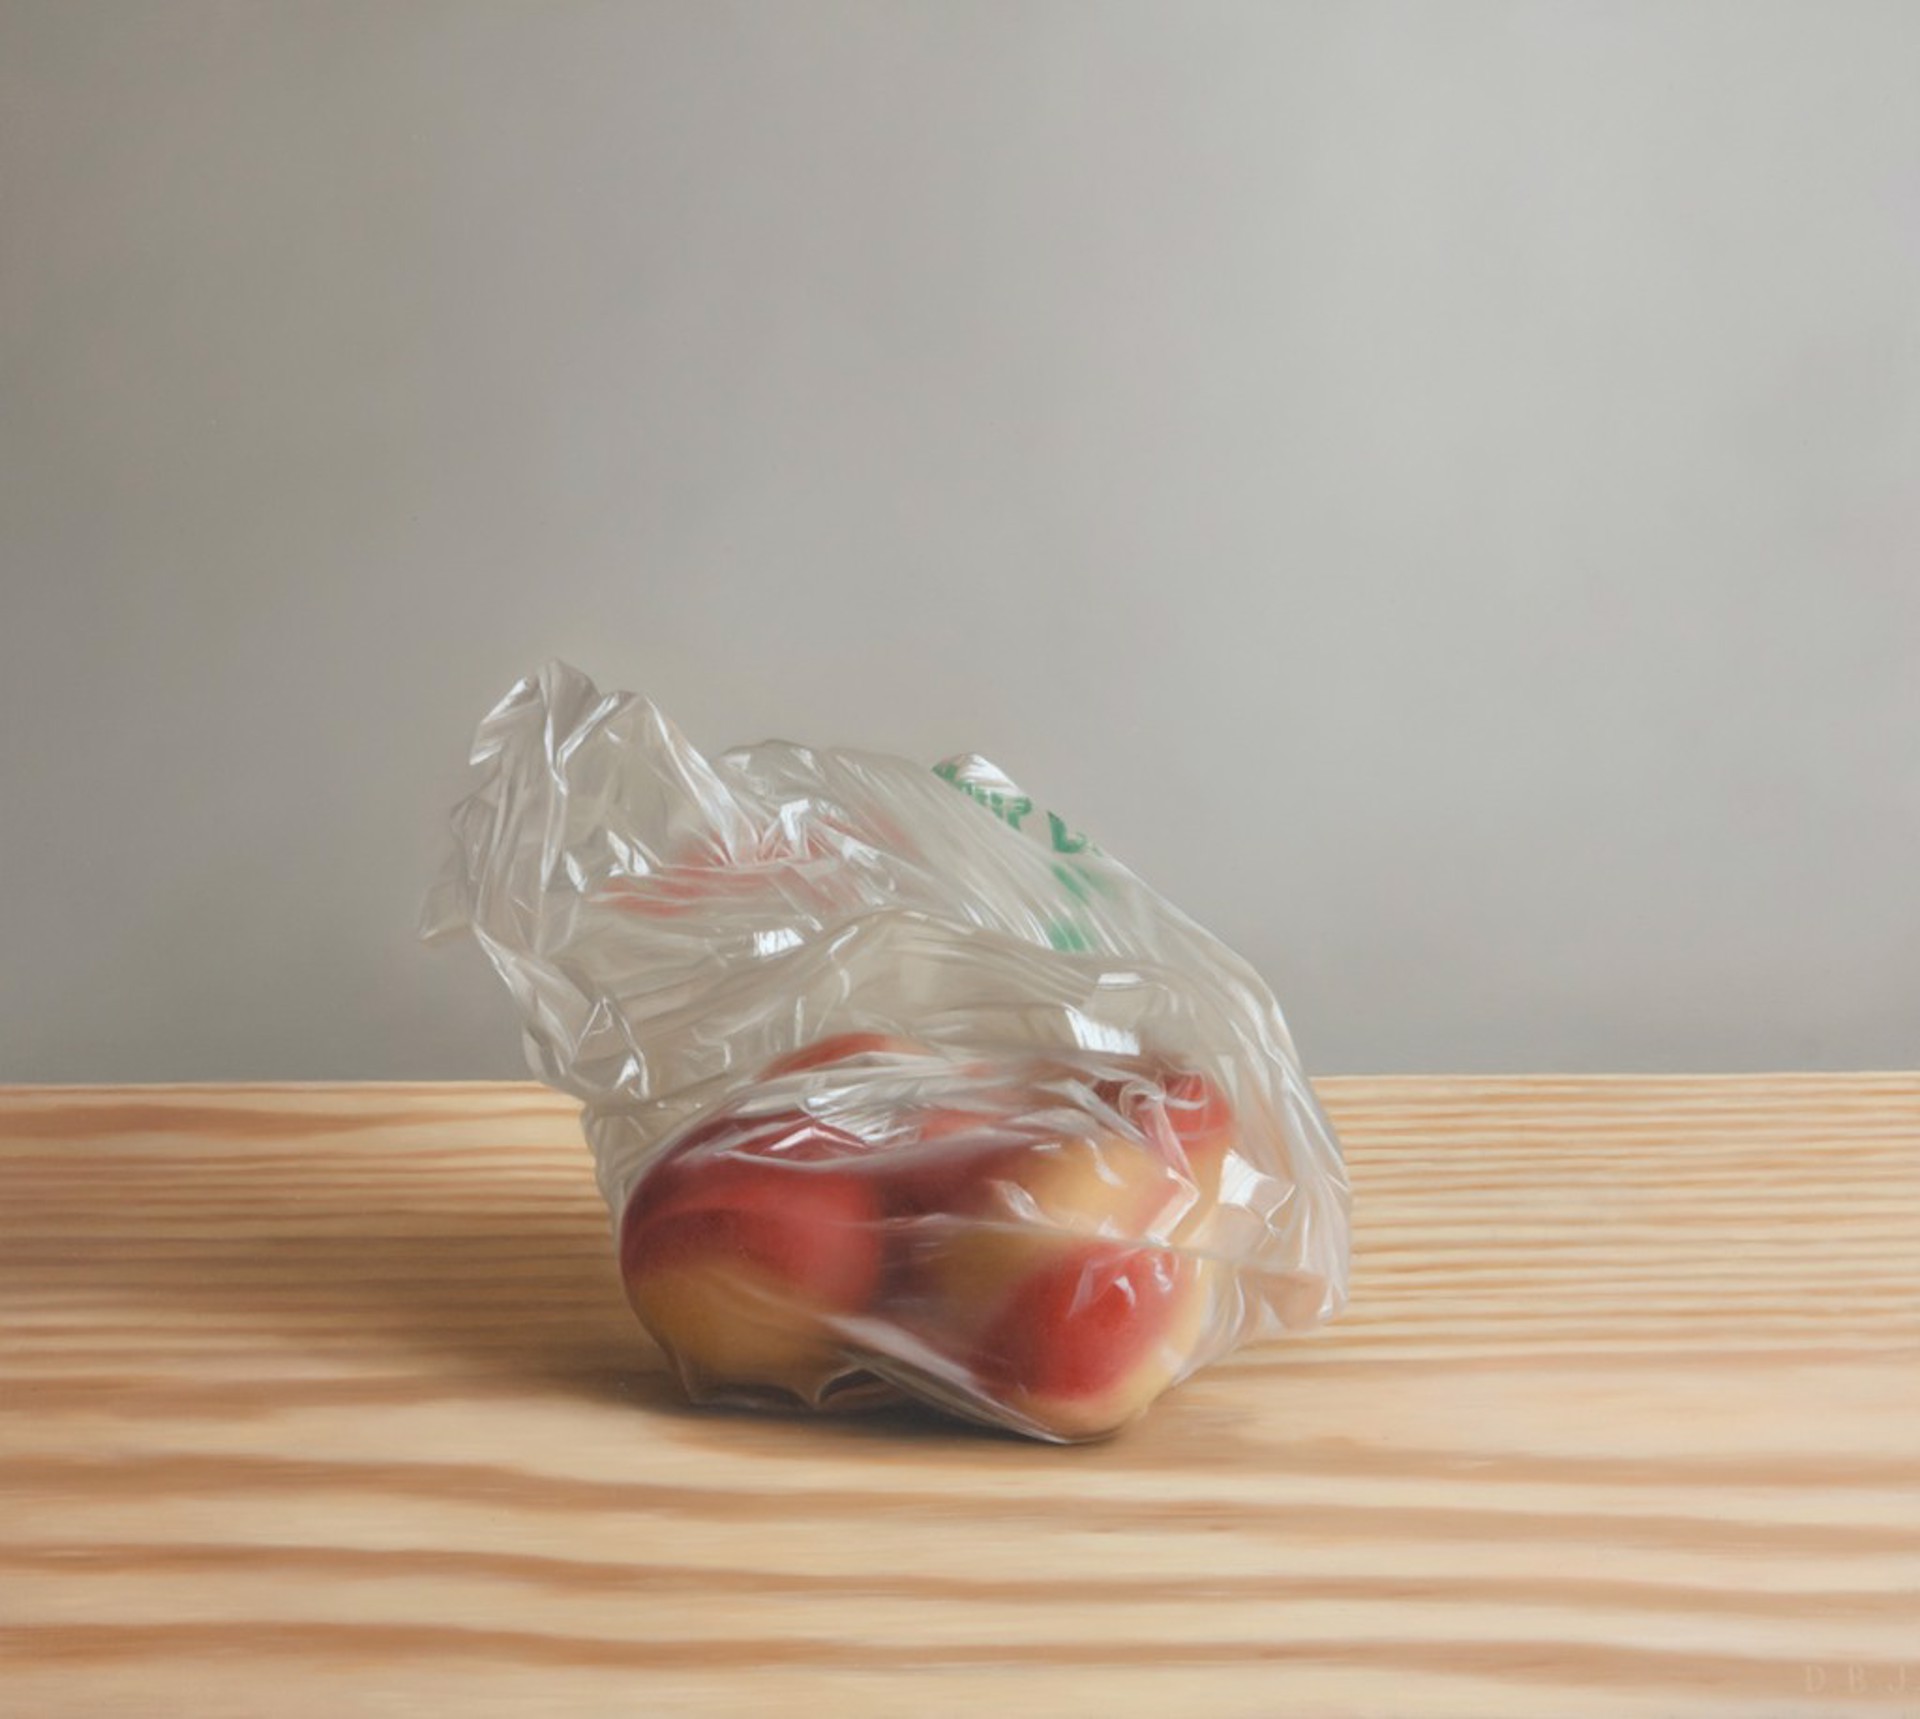 Peach Bag by Dan Jackson